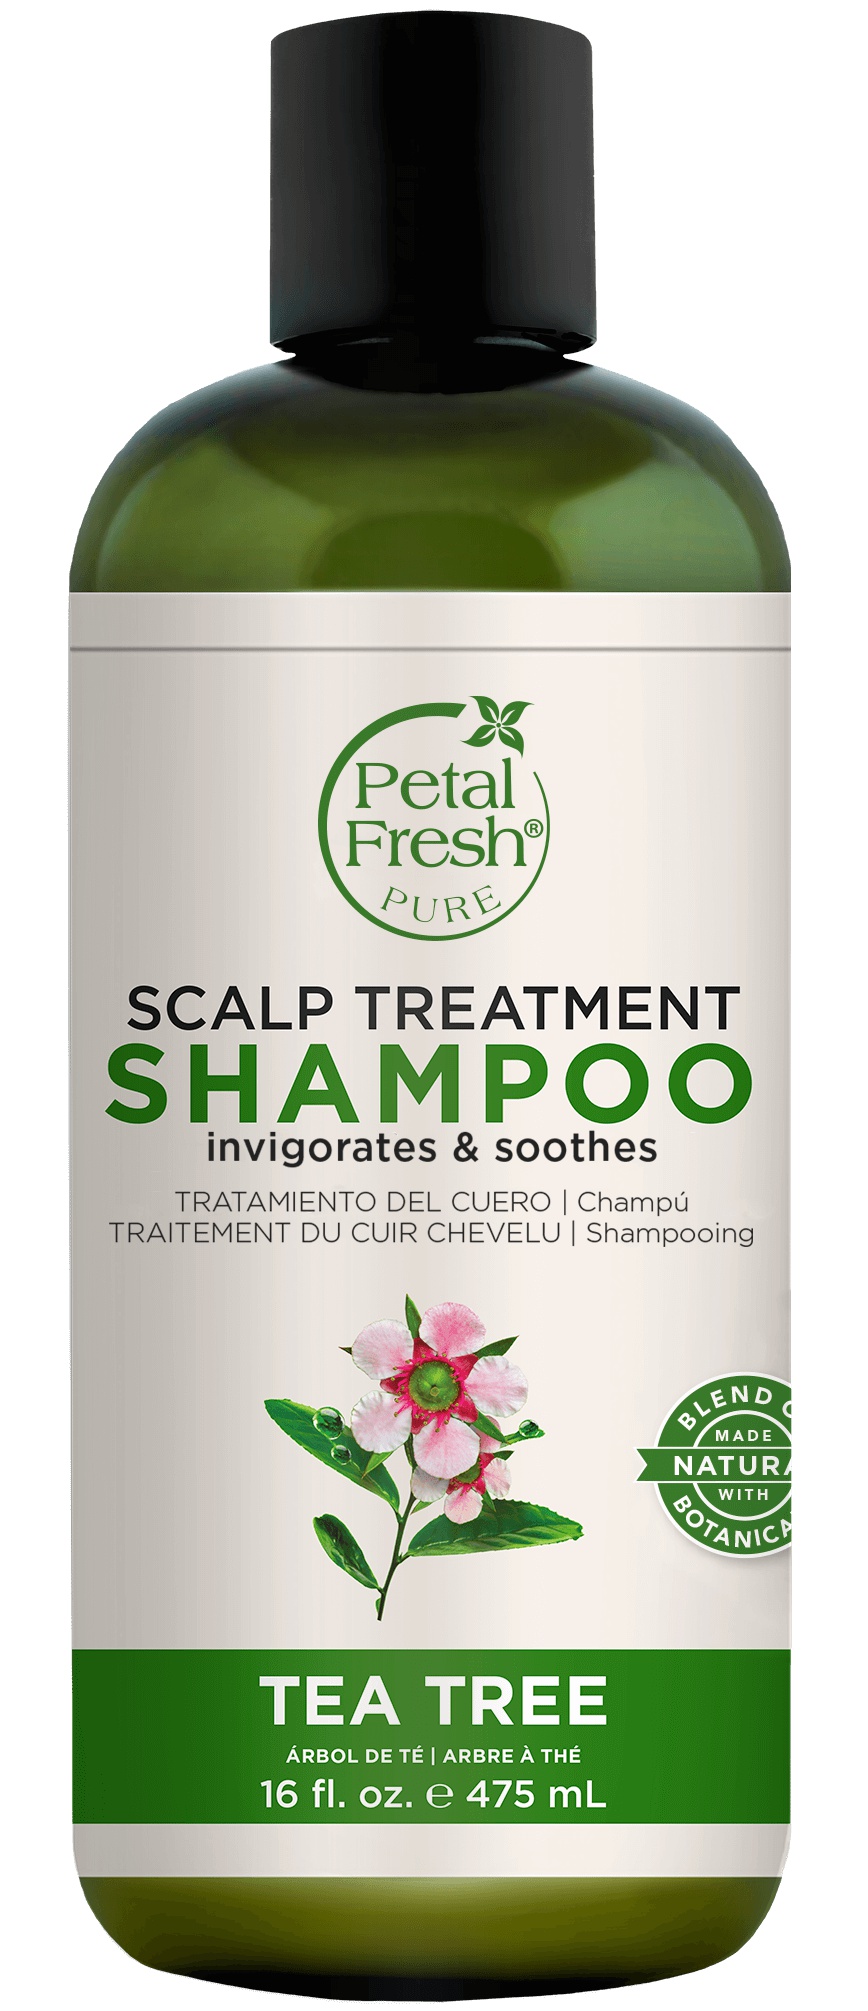 Petal fresh pure Scalp Treatment Shampoo Tea Tree